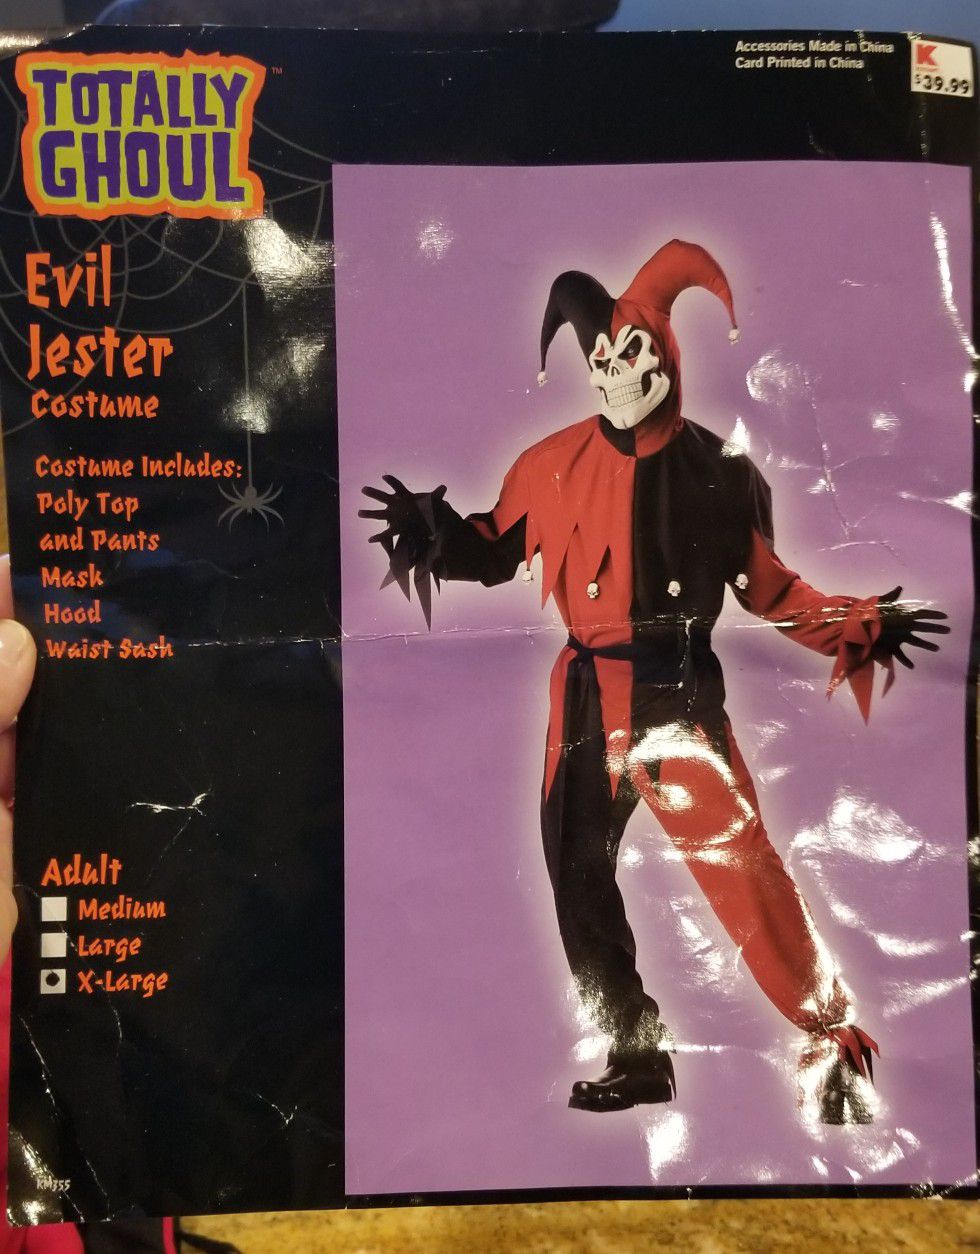 Evil Jester Halloween costume. XL